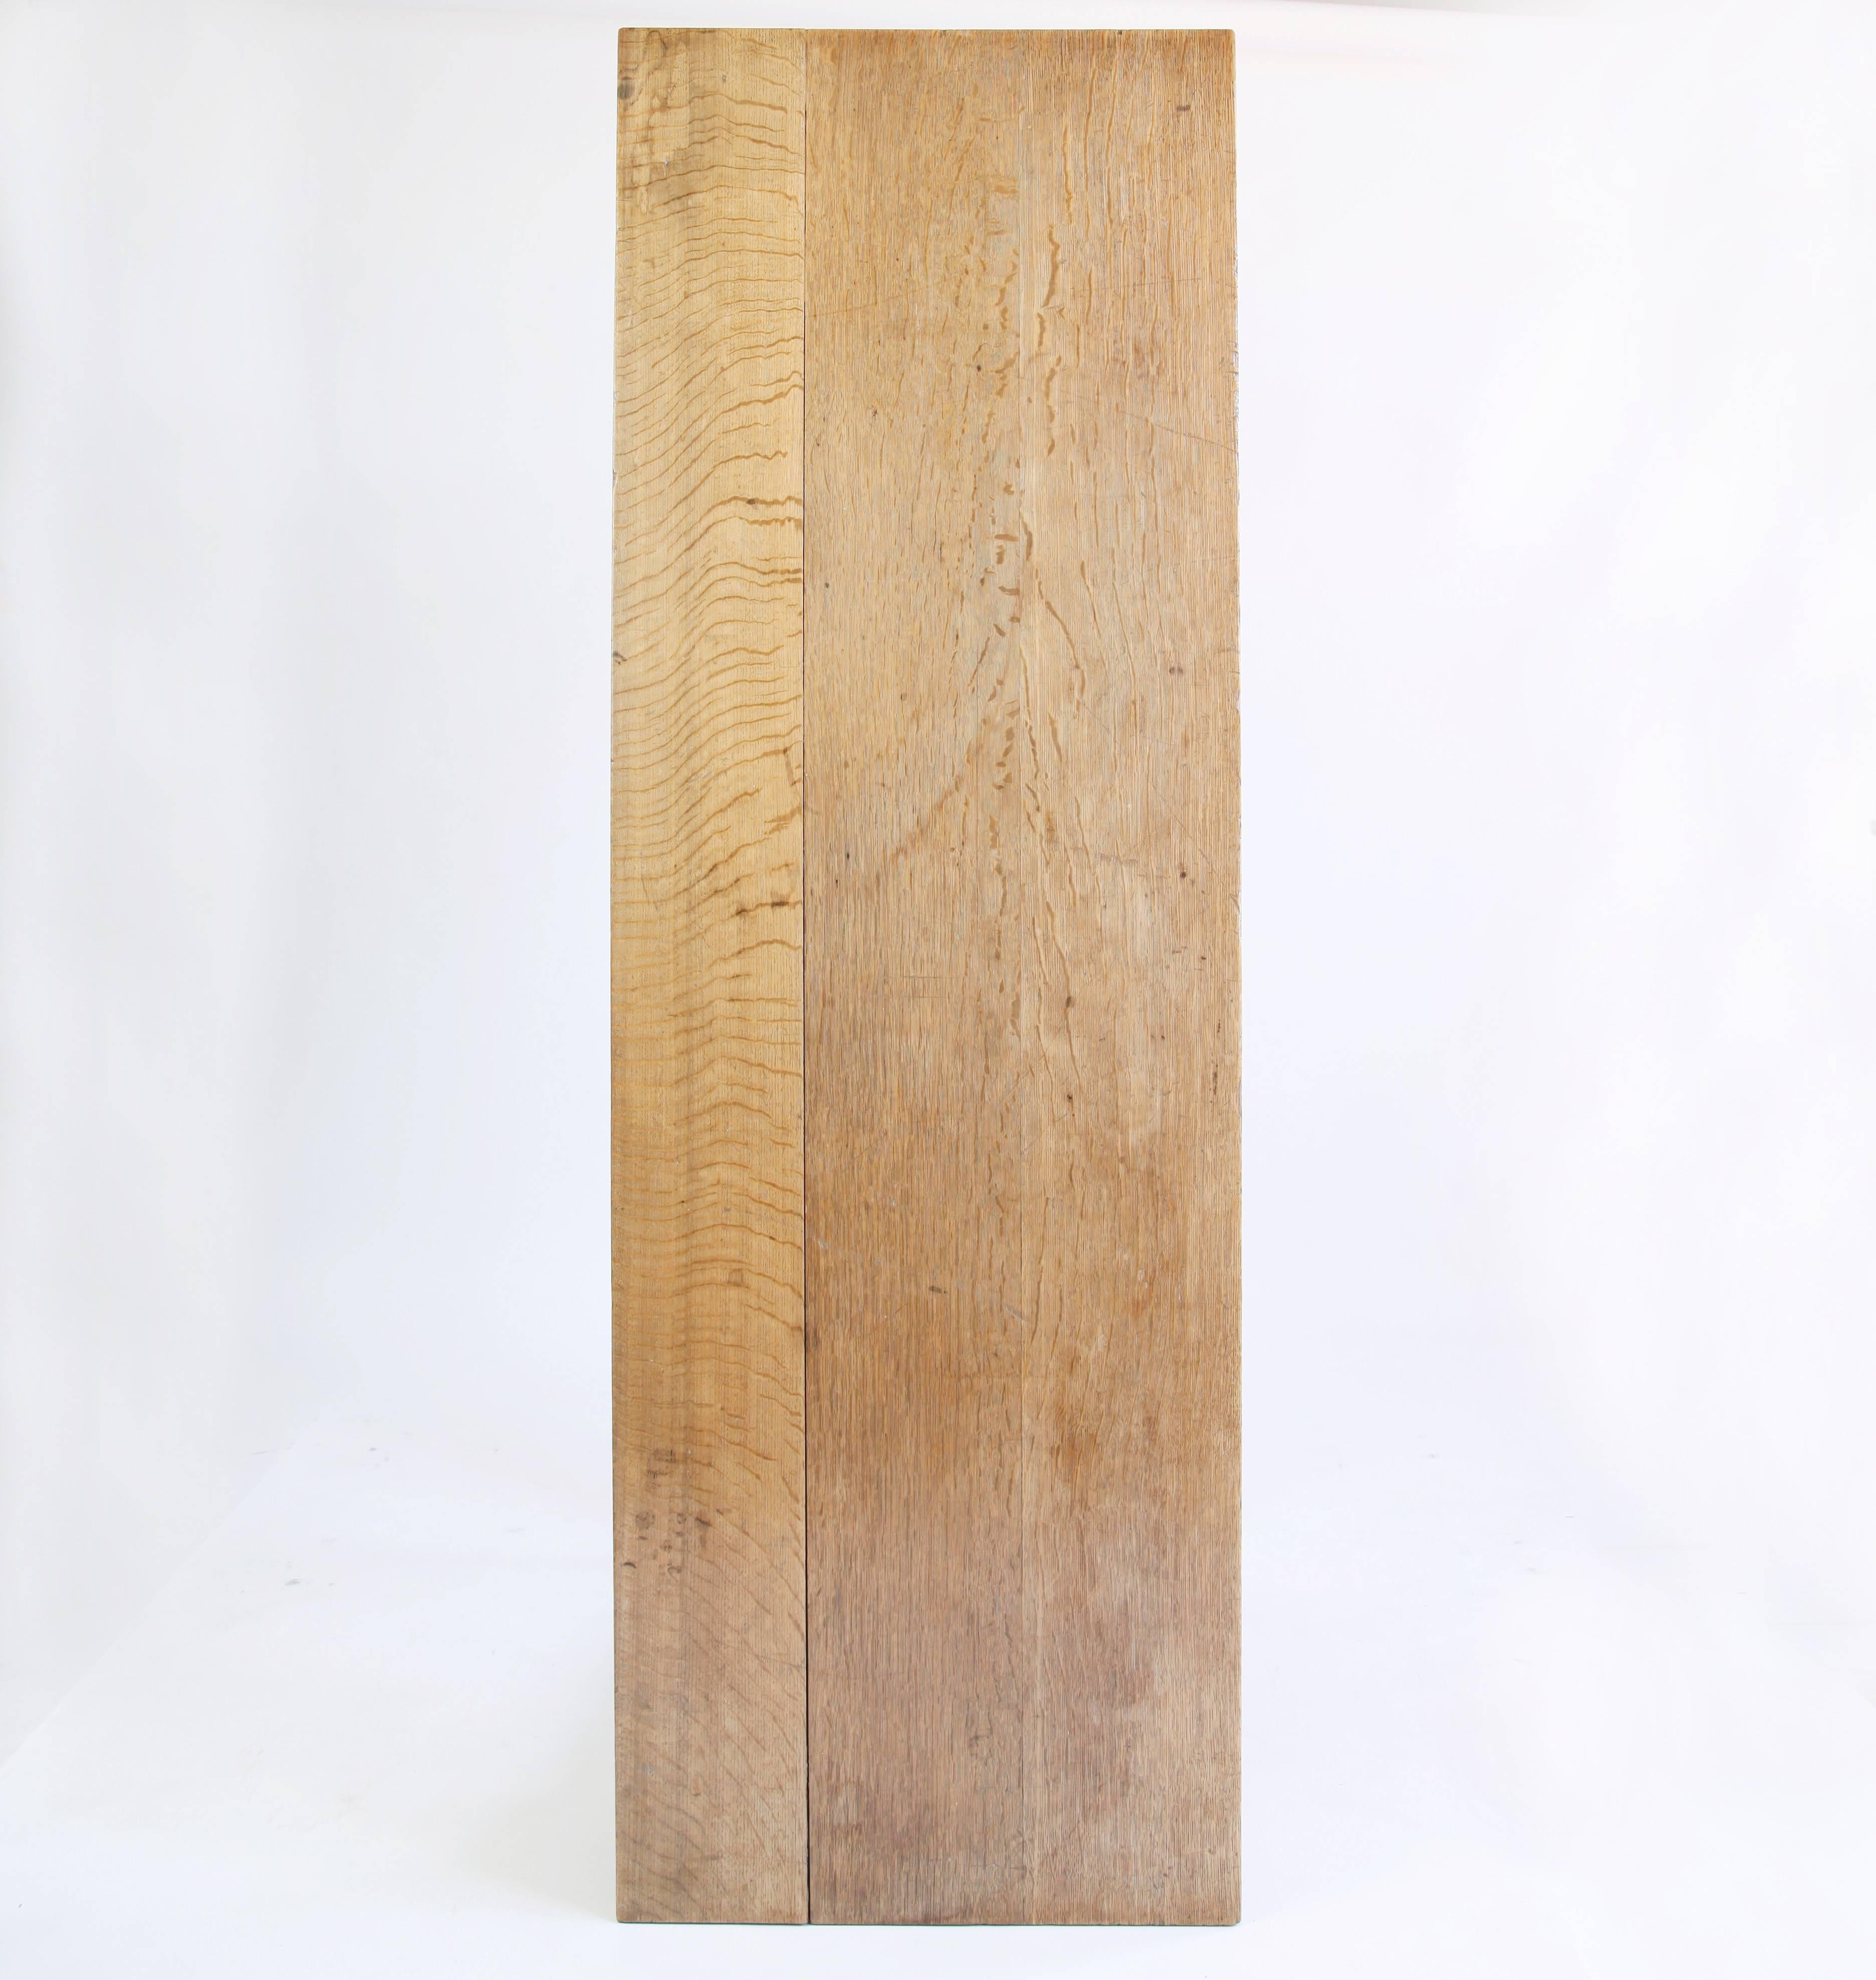 Great Britain (UK) Tall English Oak Sideboard